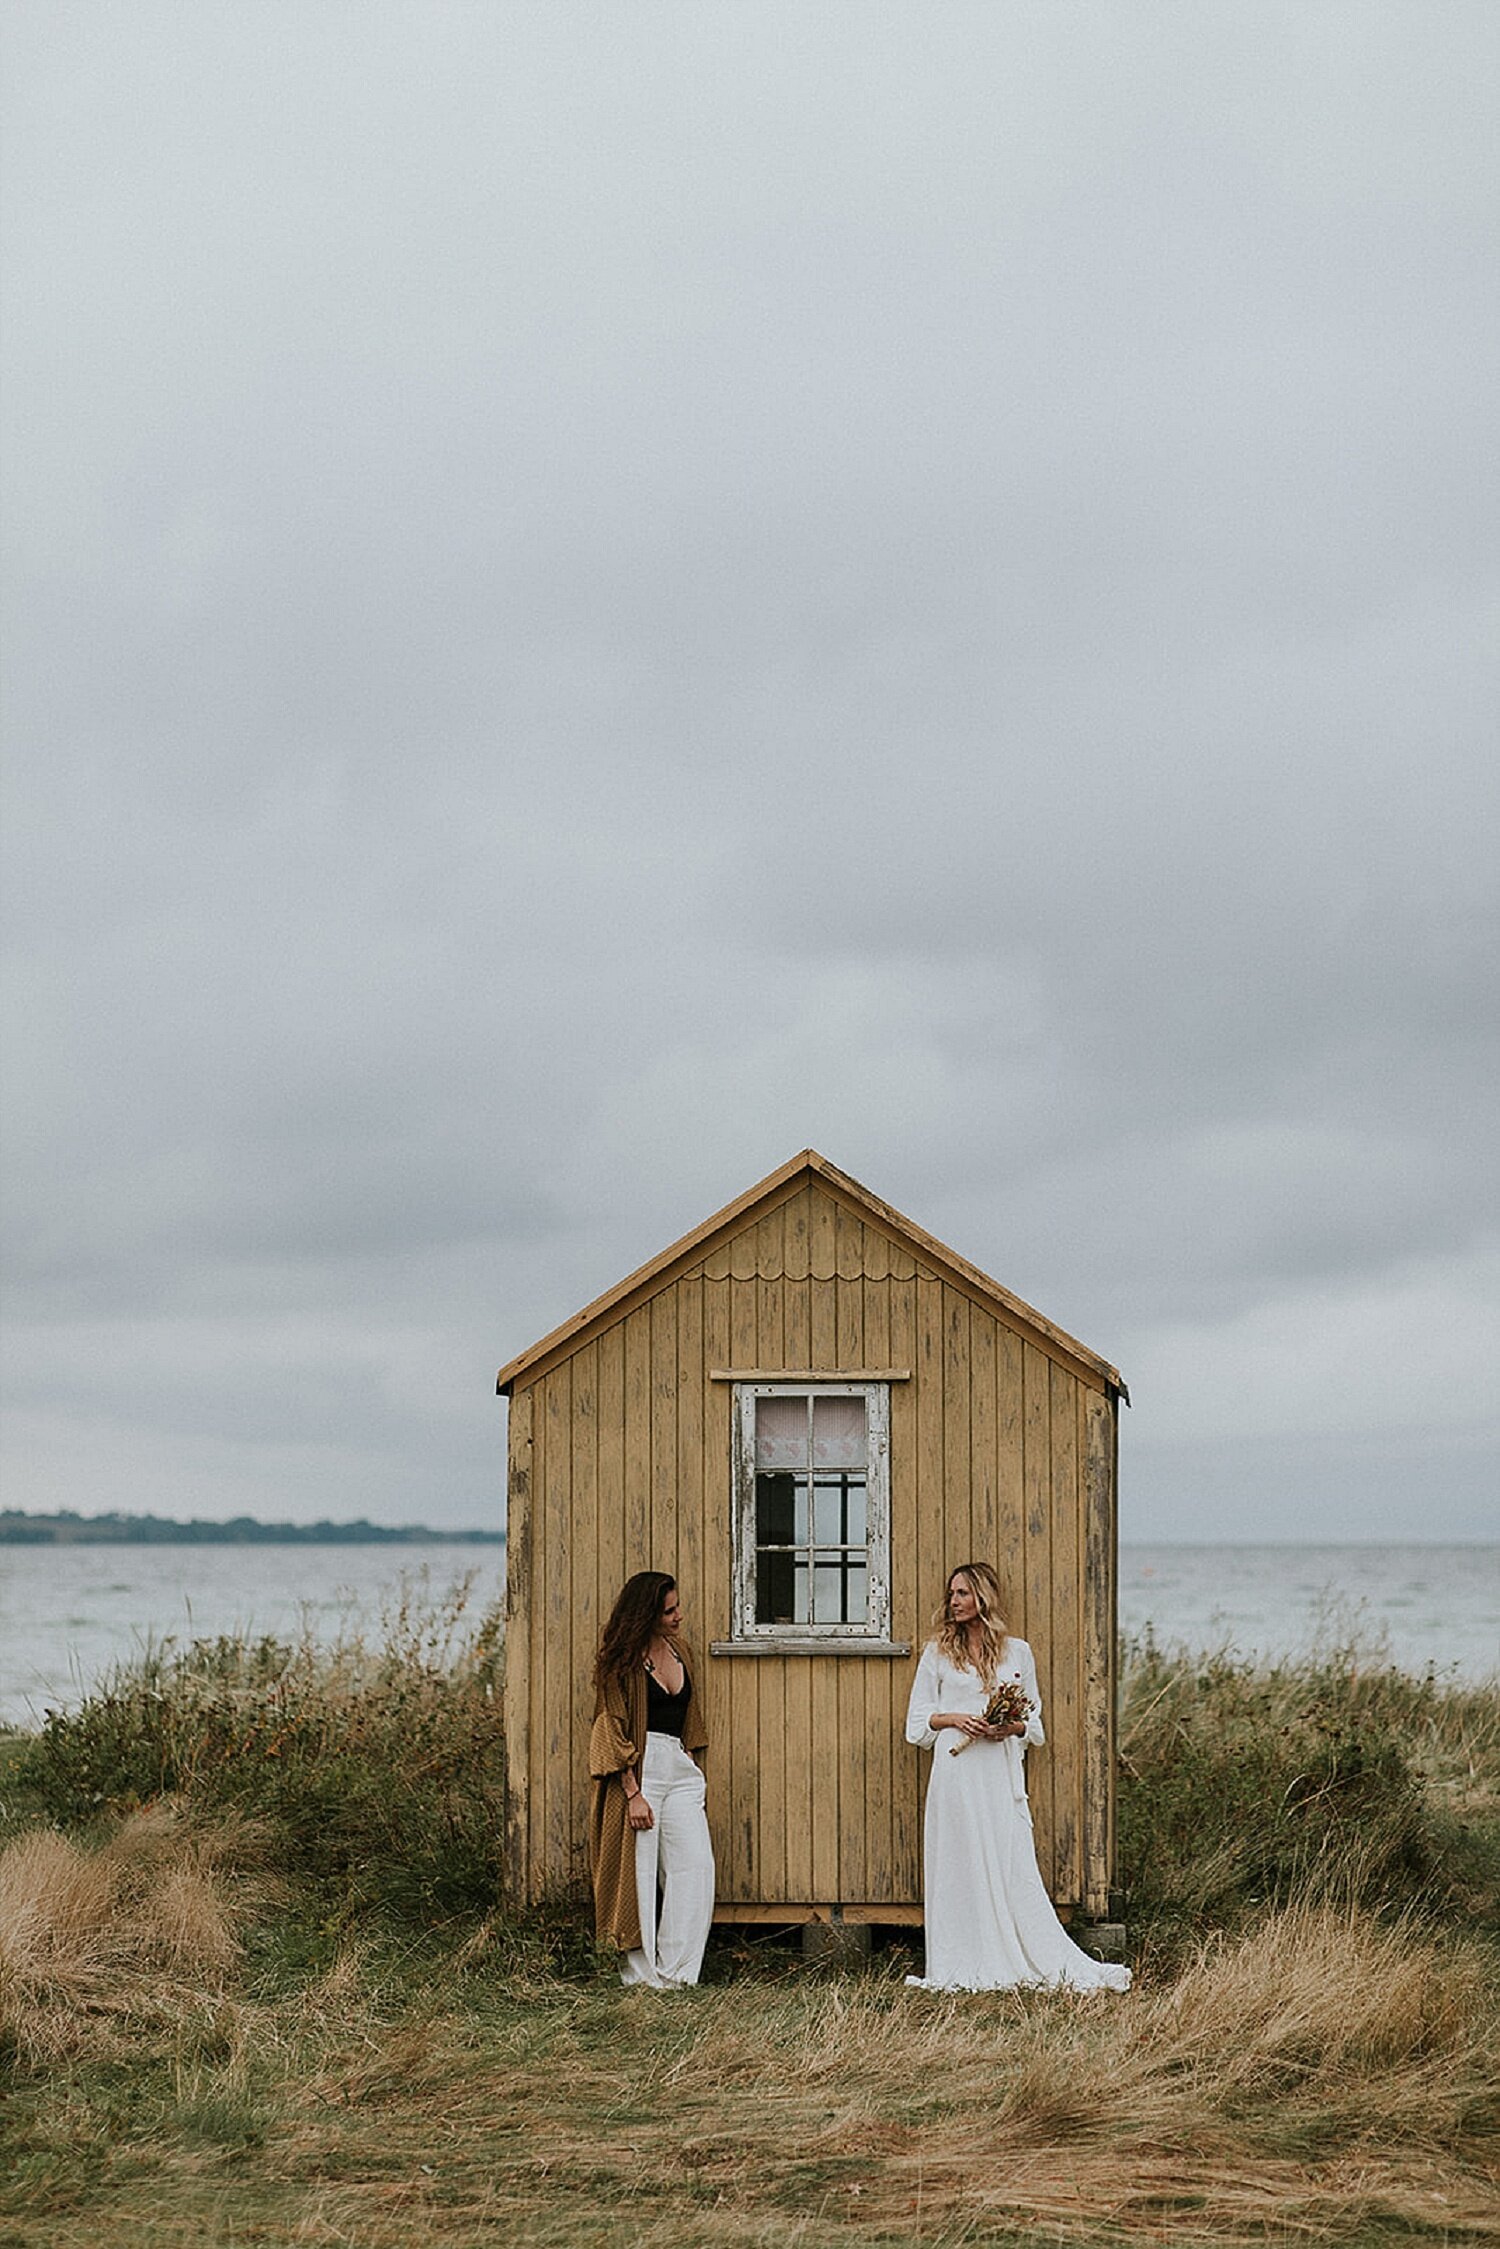 Elope to Aero island | Gay couple getting married in Denmark | lgbtq+ weddings | Denmark wedding venue | Aero Island | Danish Island Weddings | Full service wedding planners